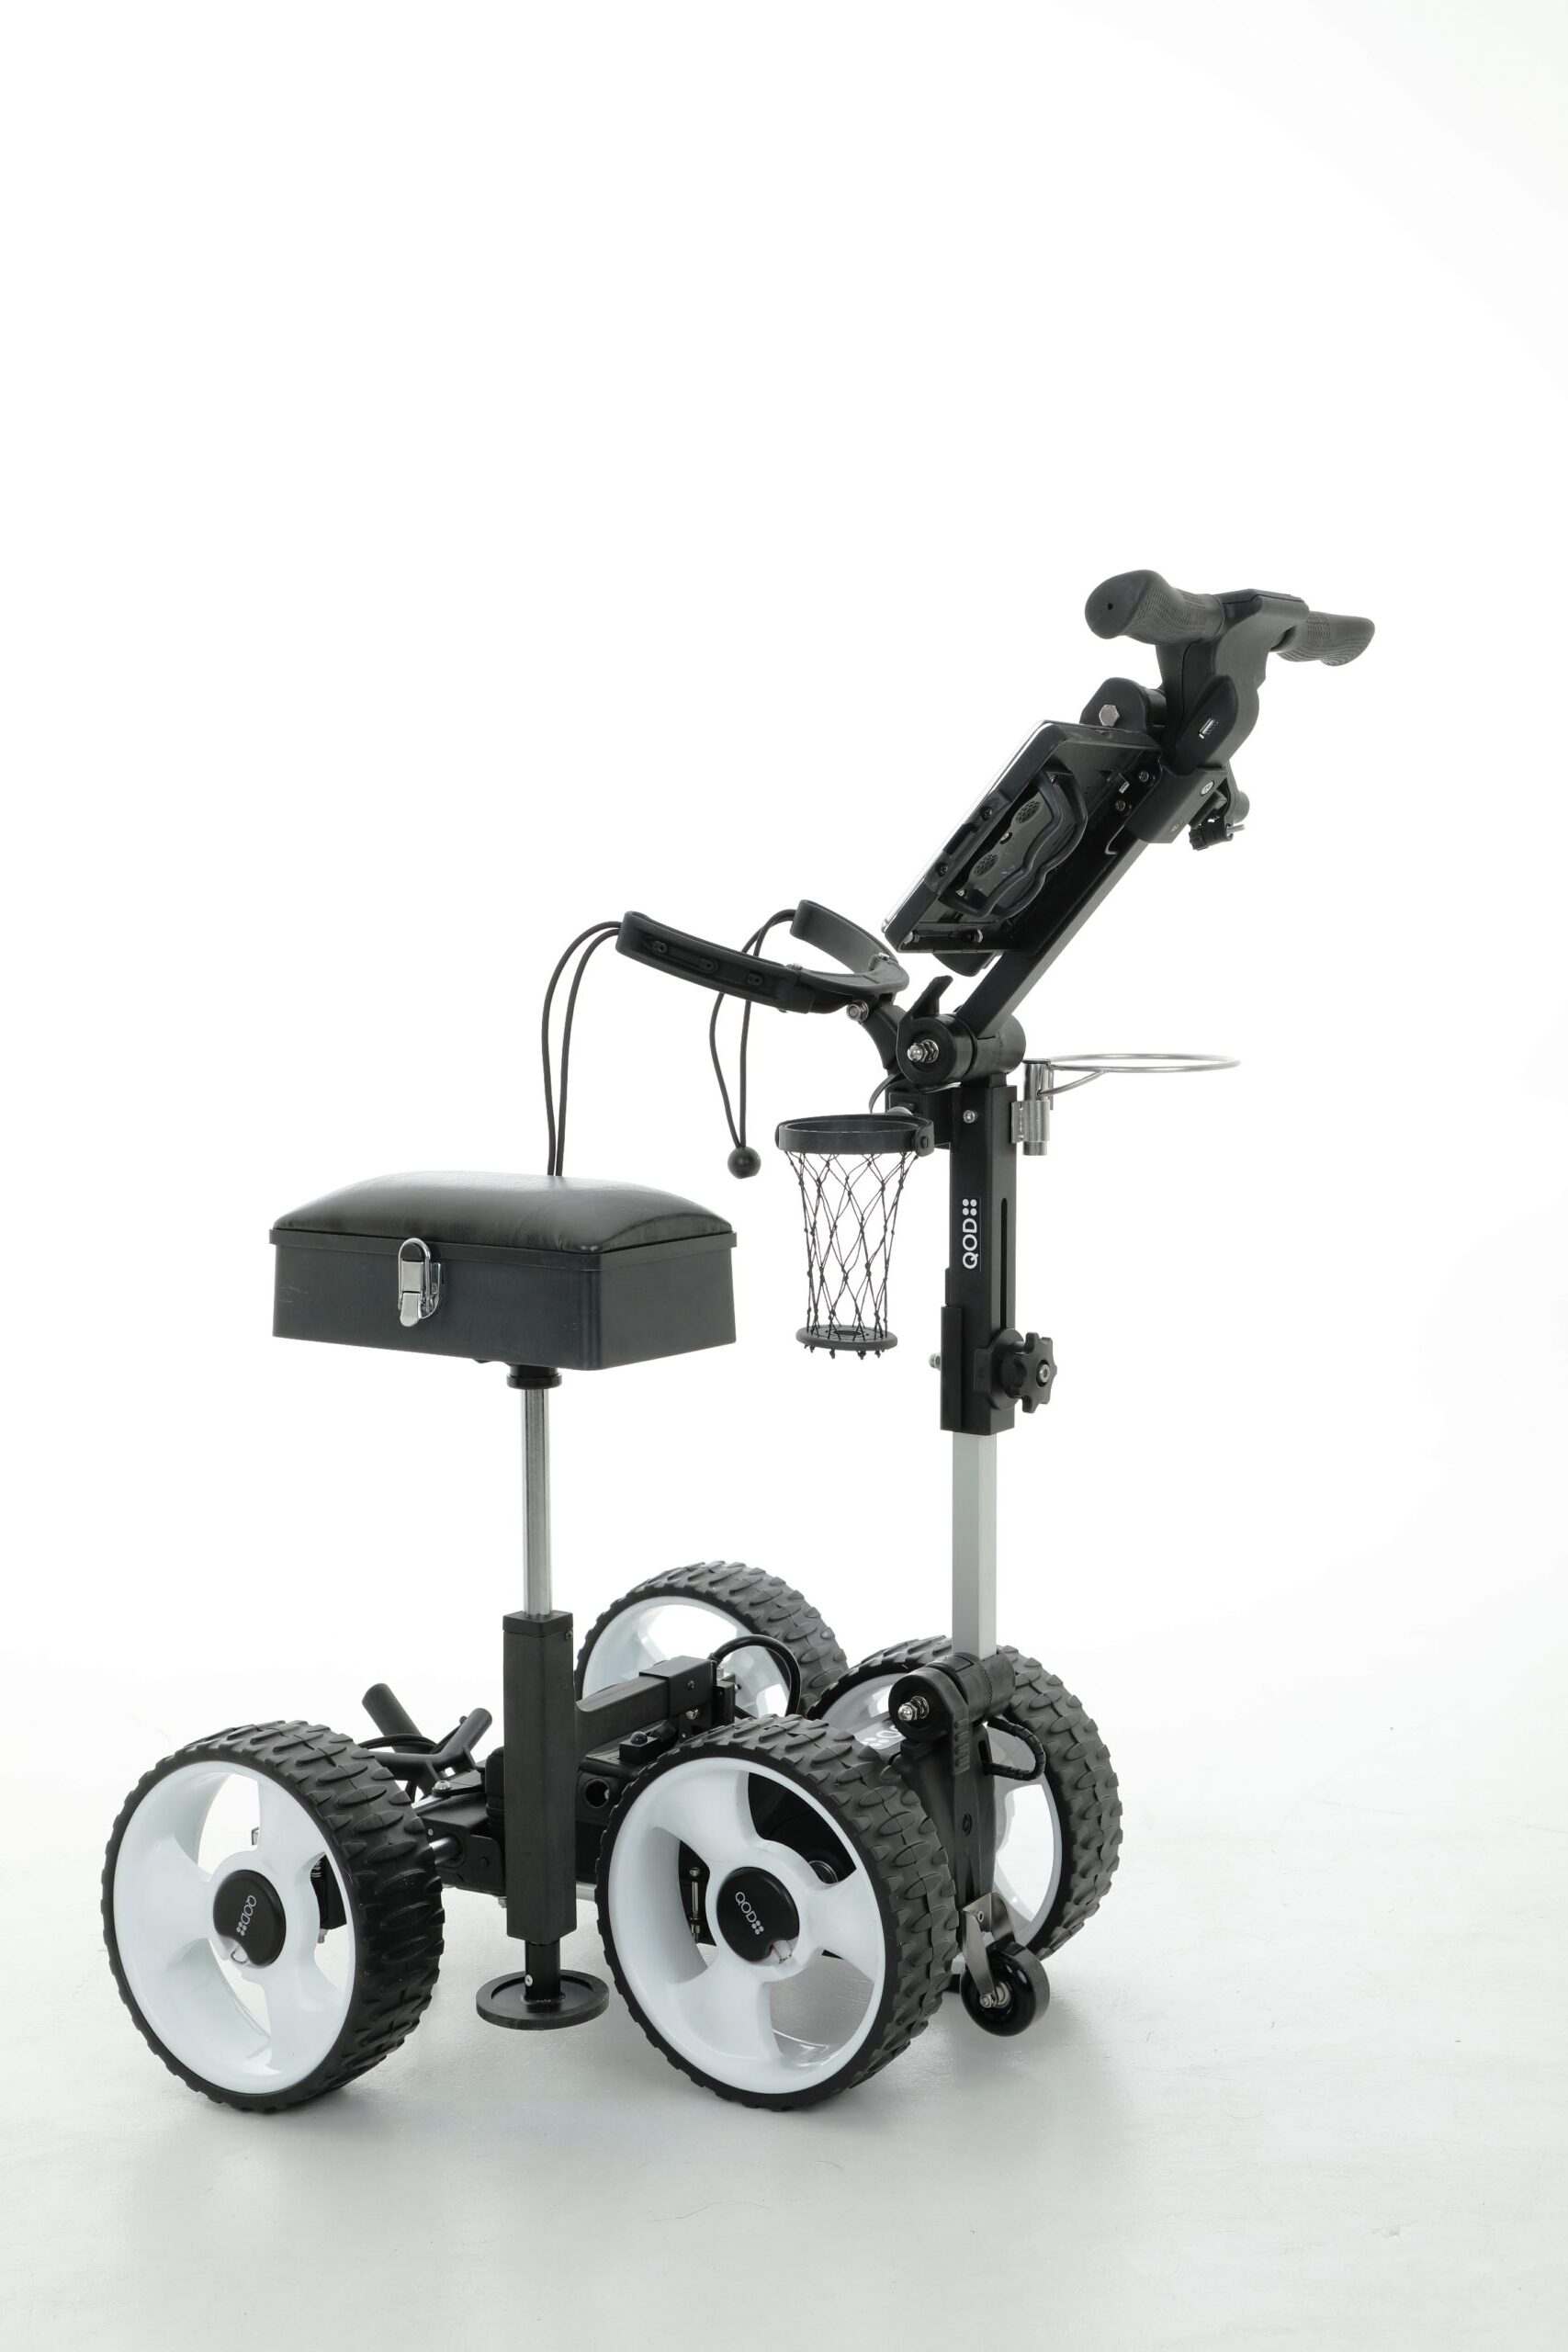 1454-5th-wheel-stability-enhancement-cart-view-scaled-e1642603112325-16668969544111.jpg